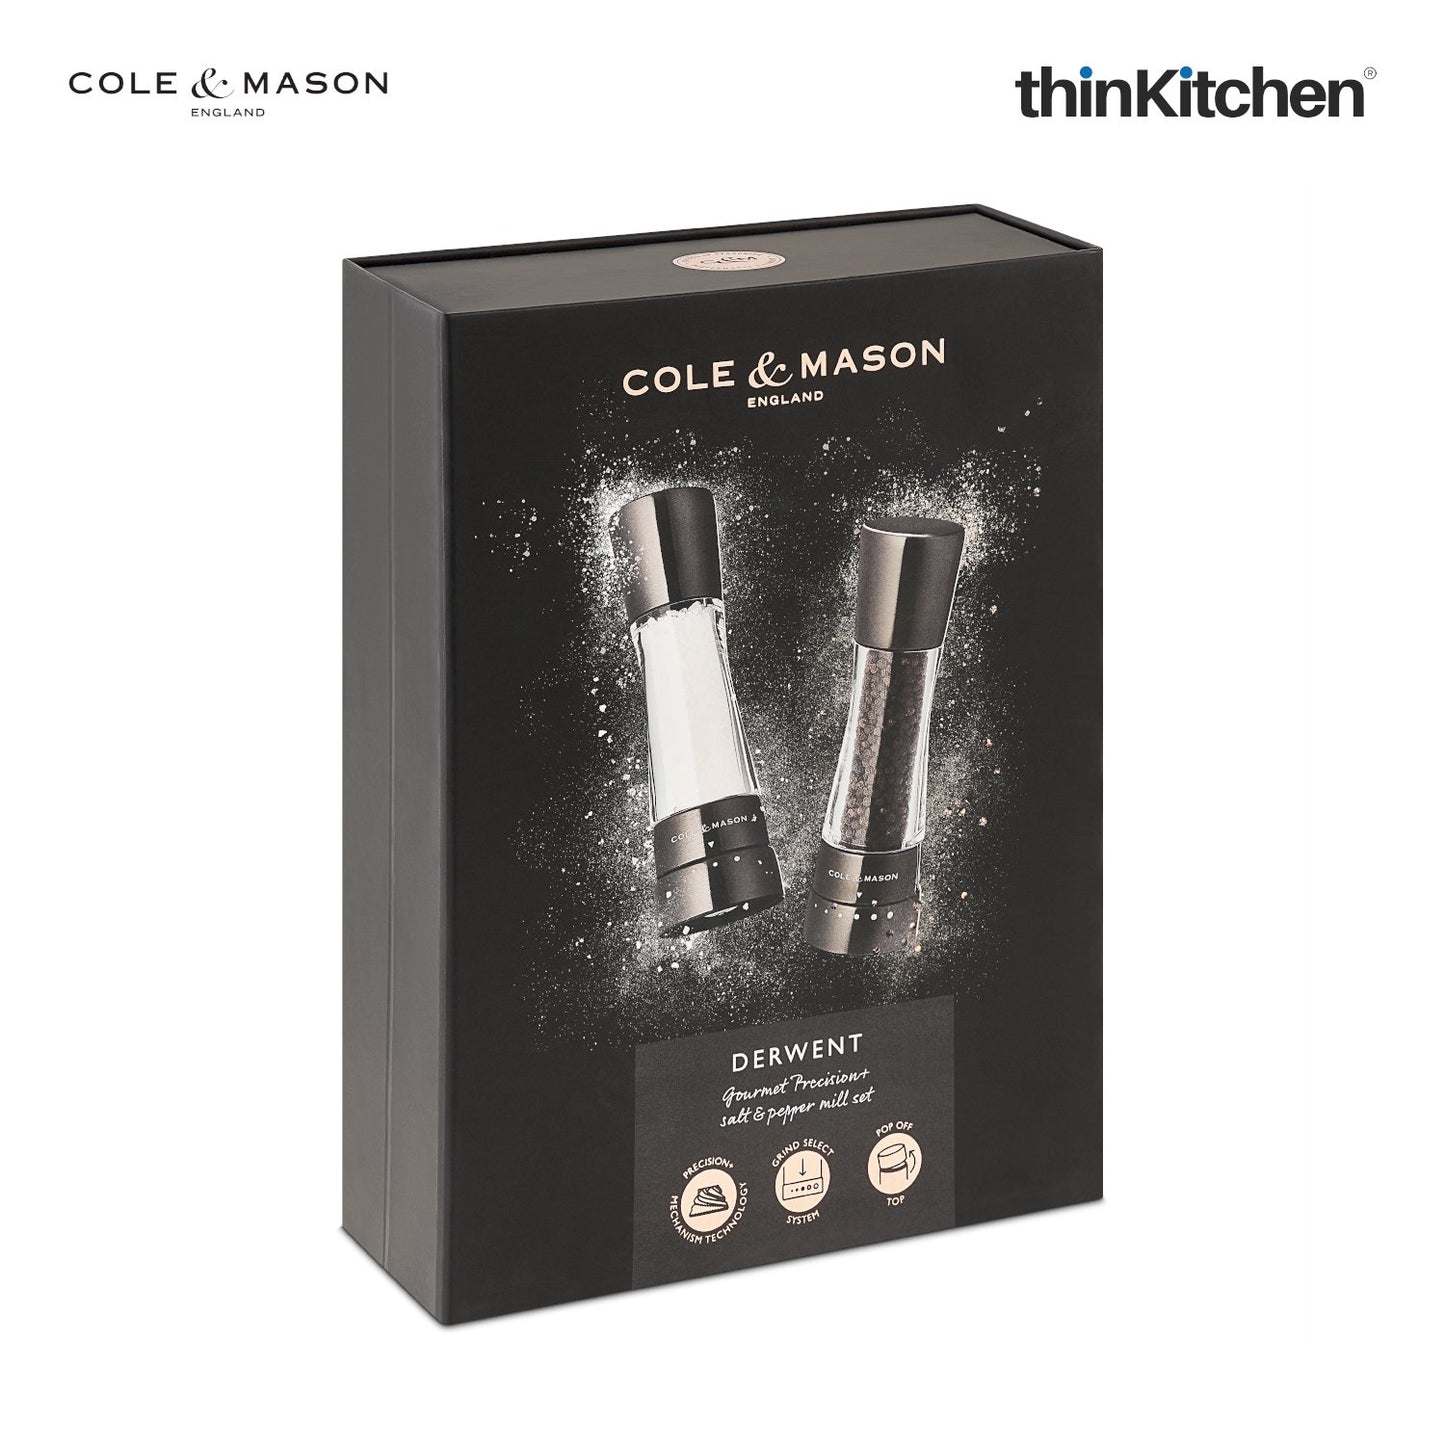 Cole Mason Gourmet Precision Manual Derwent 190mm Gunmetal